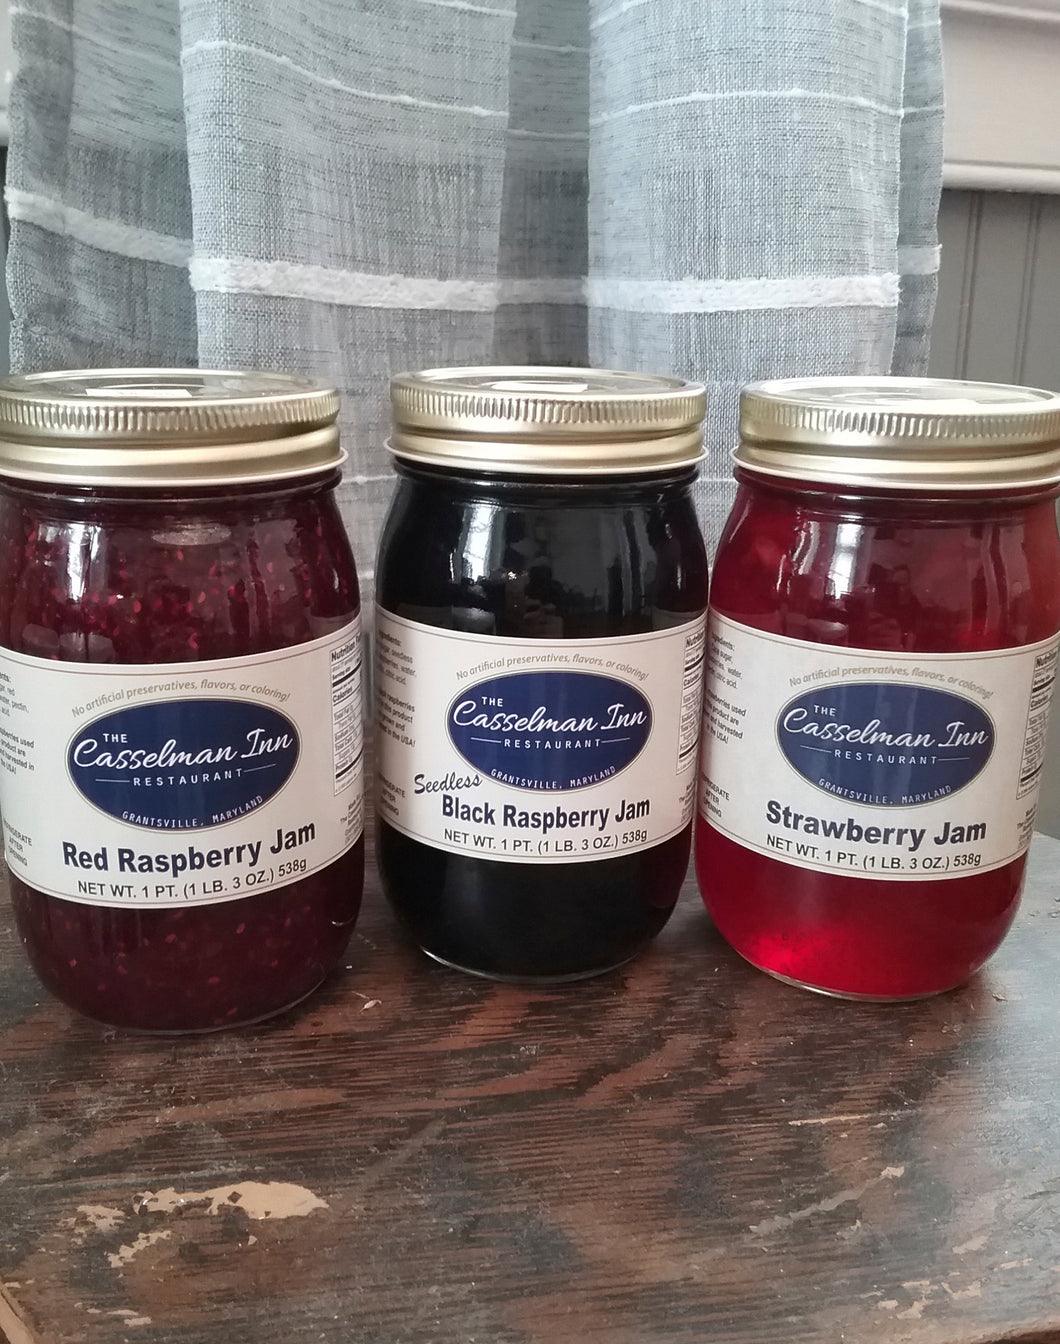 Red Raspberry Jam - Pint